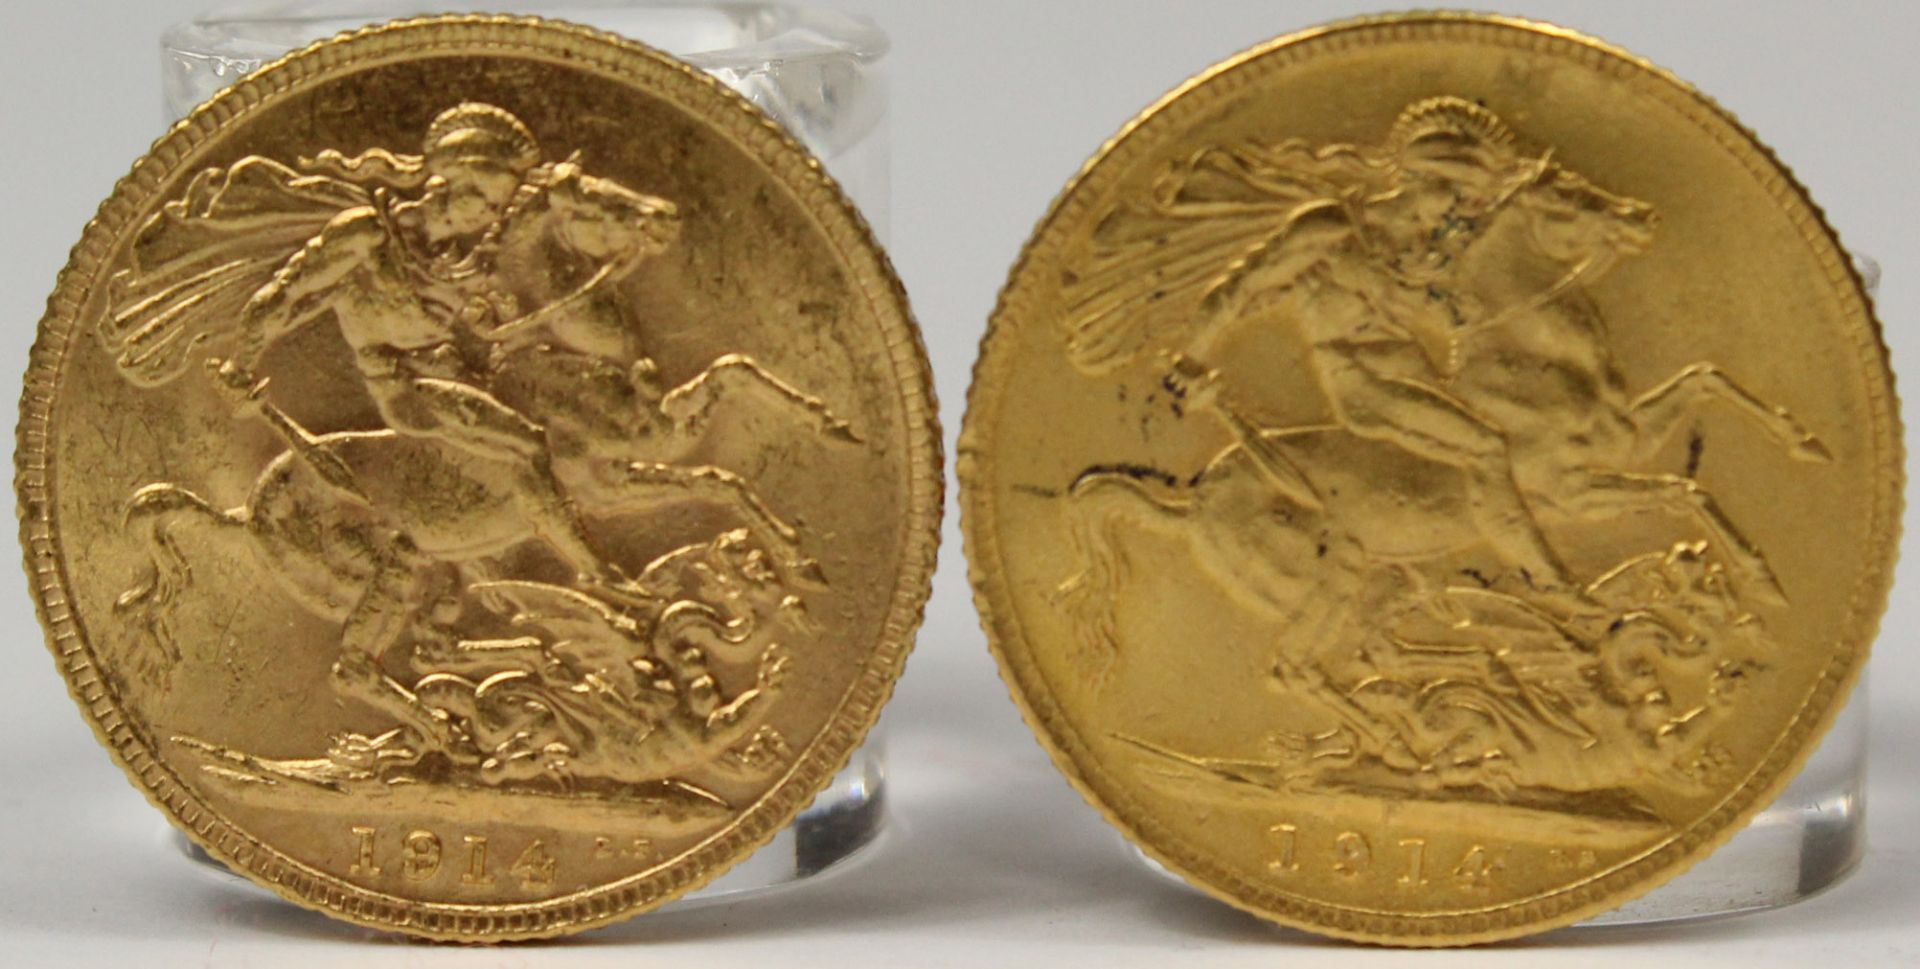 2x Sovereign Goldmünzen. 1914. - Image 2 of 4